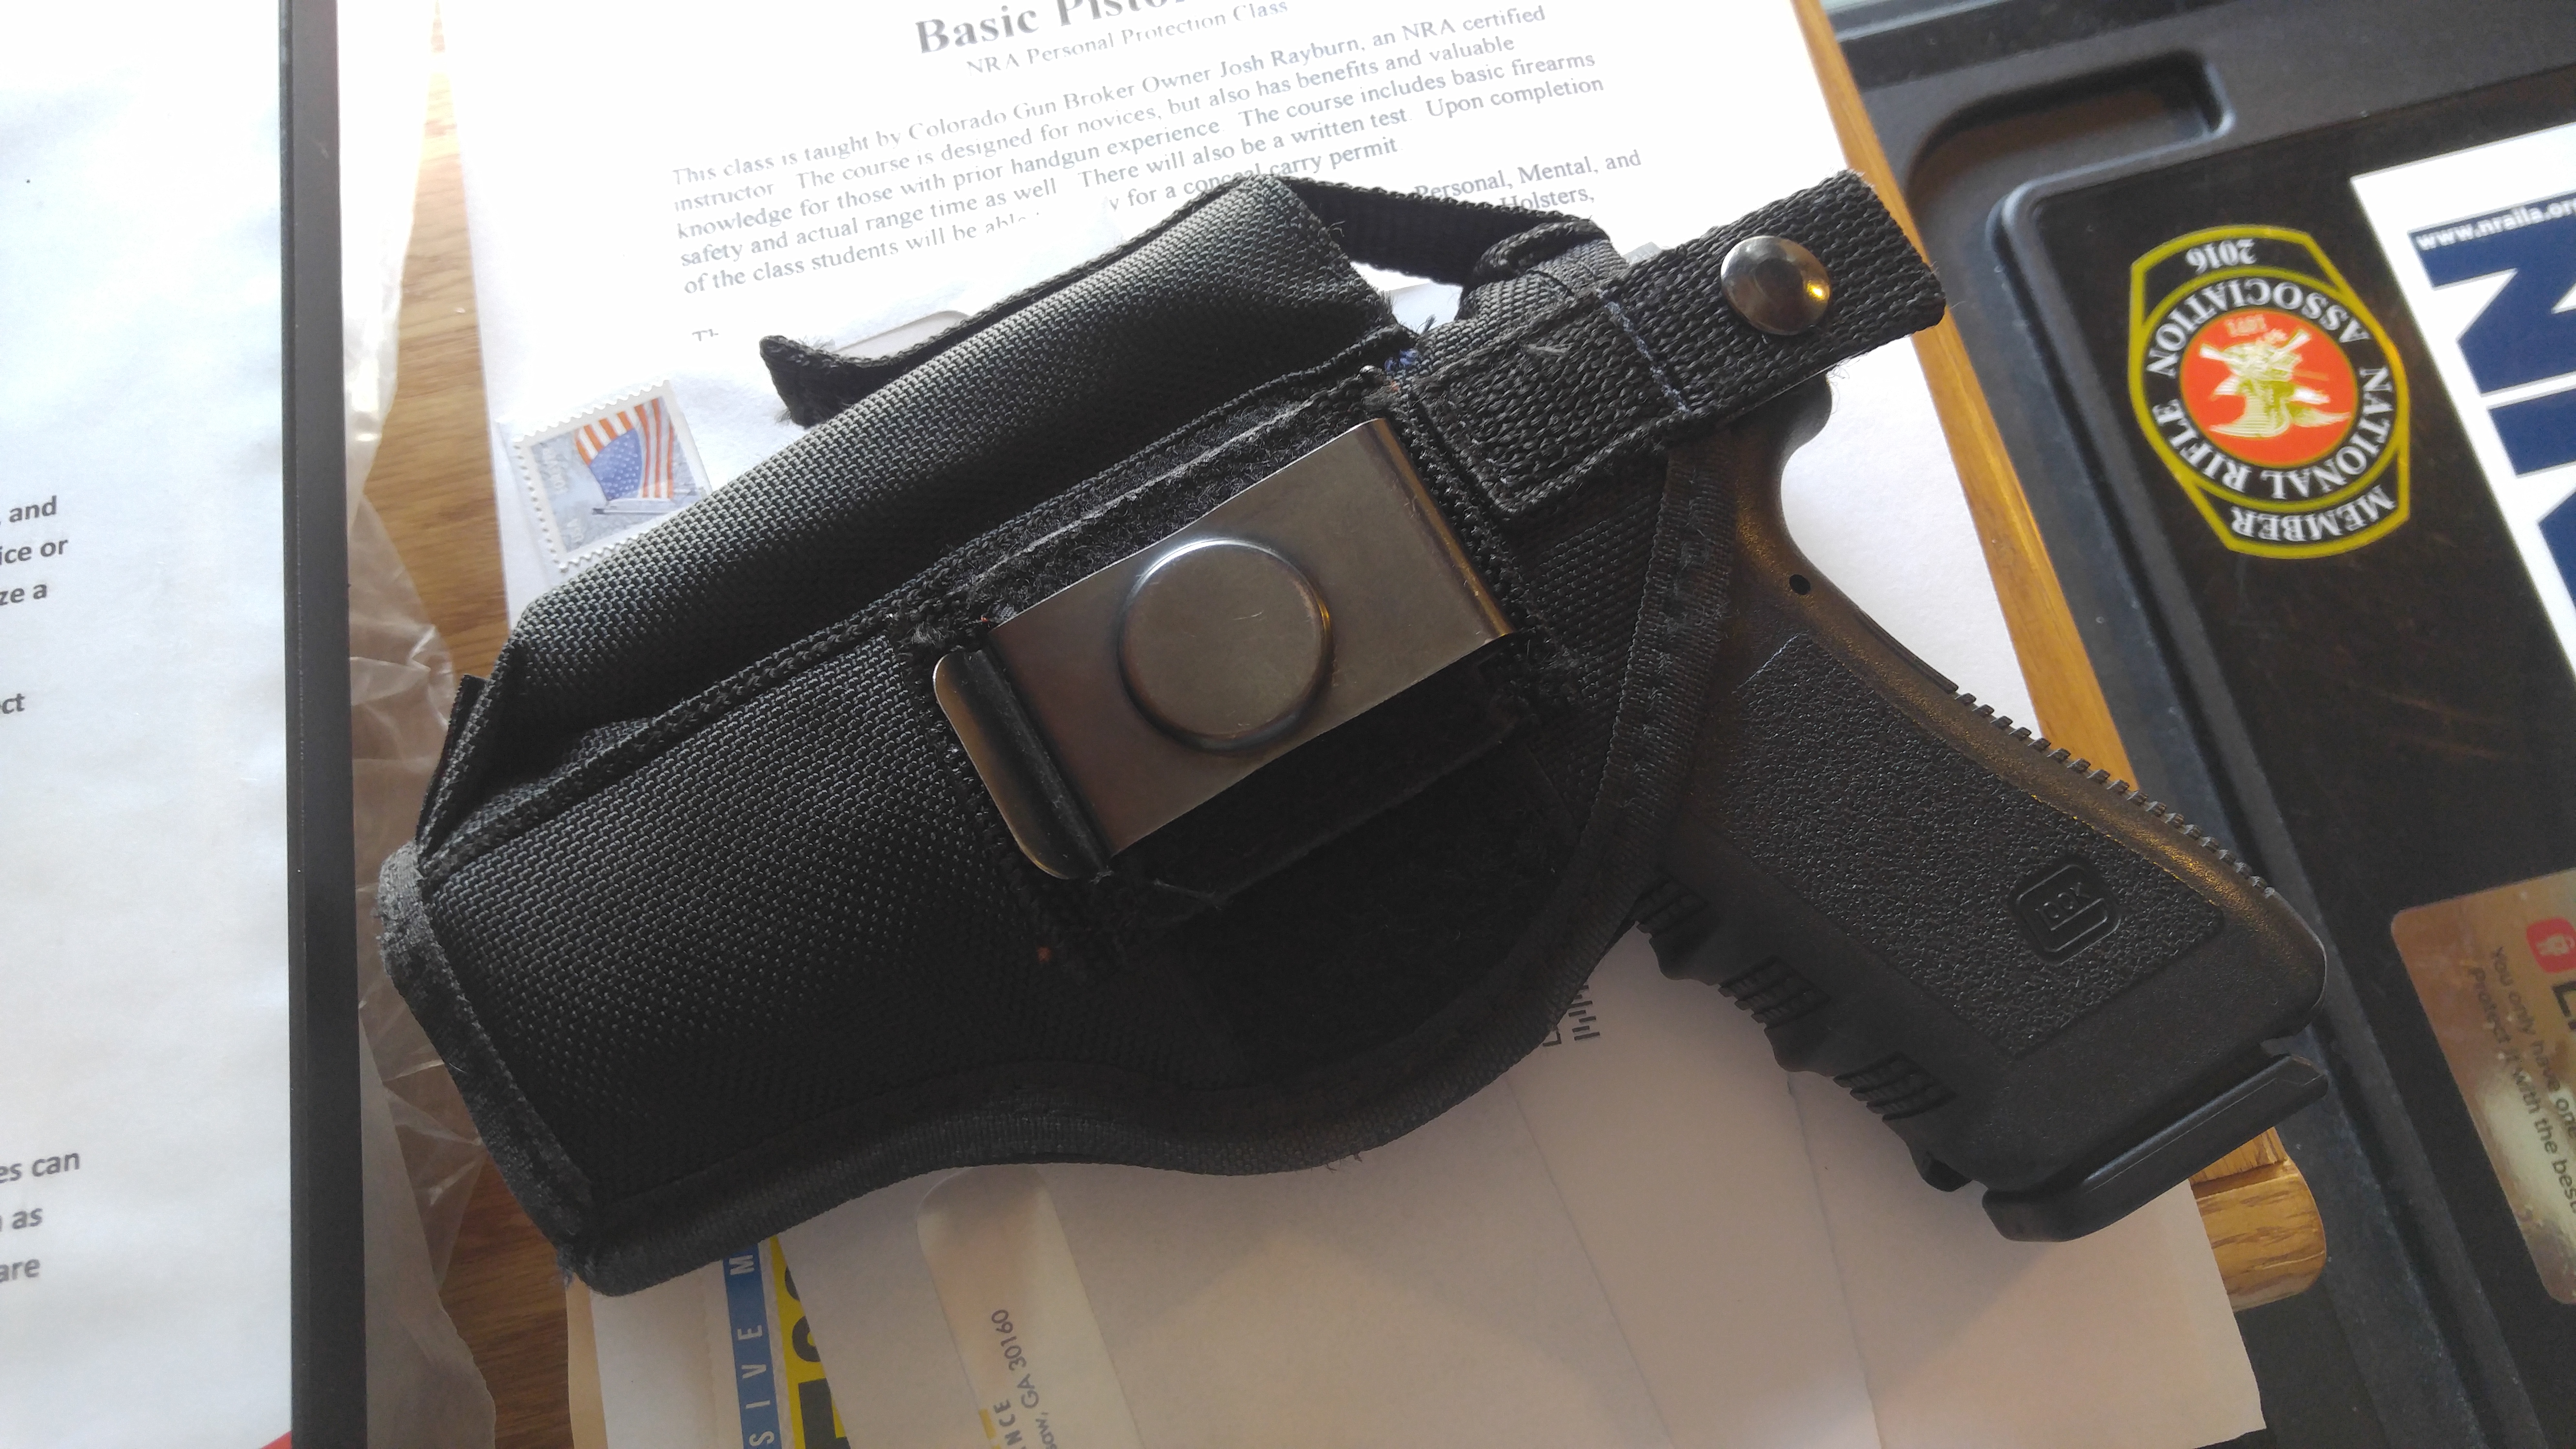 police firearm in gun holster